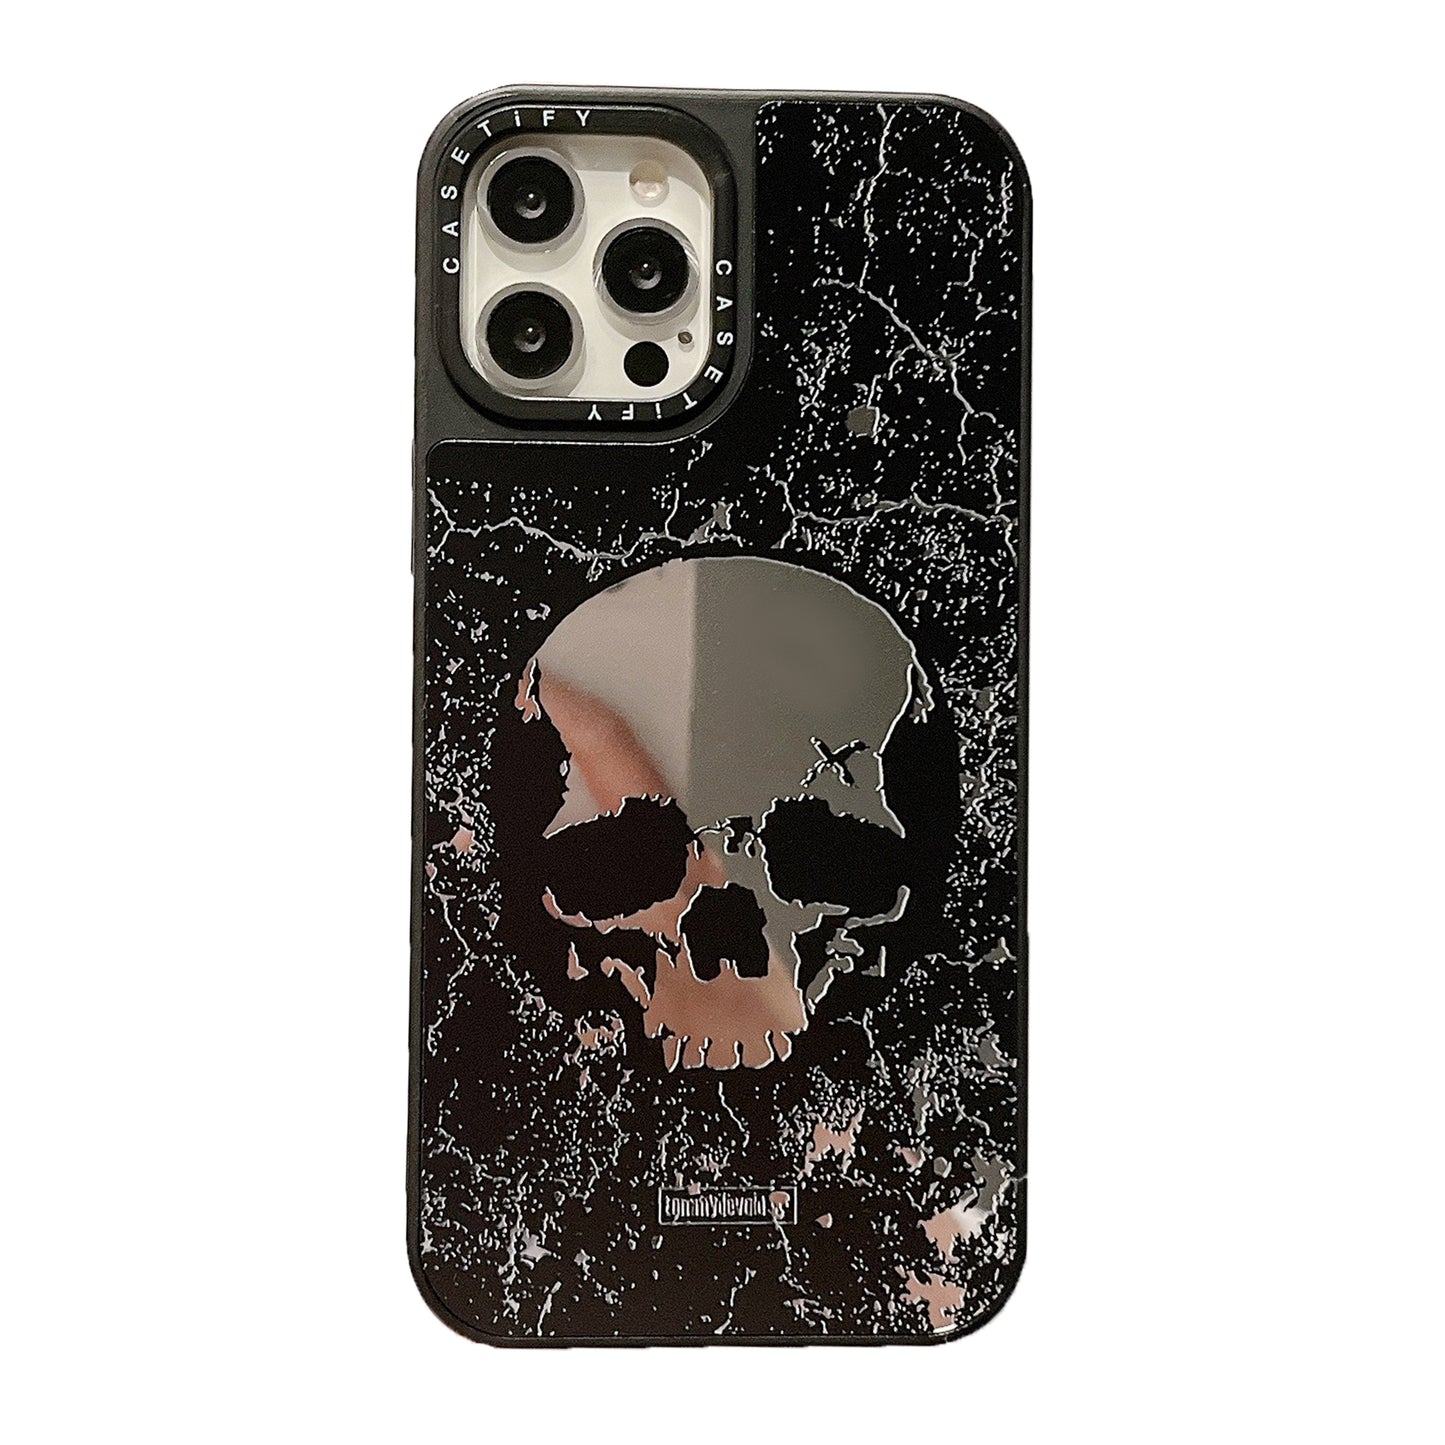 iPhone case,Bullying Skeleton,Mirror case.